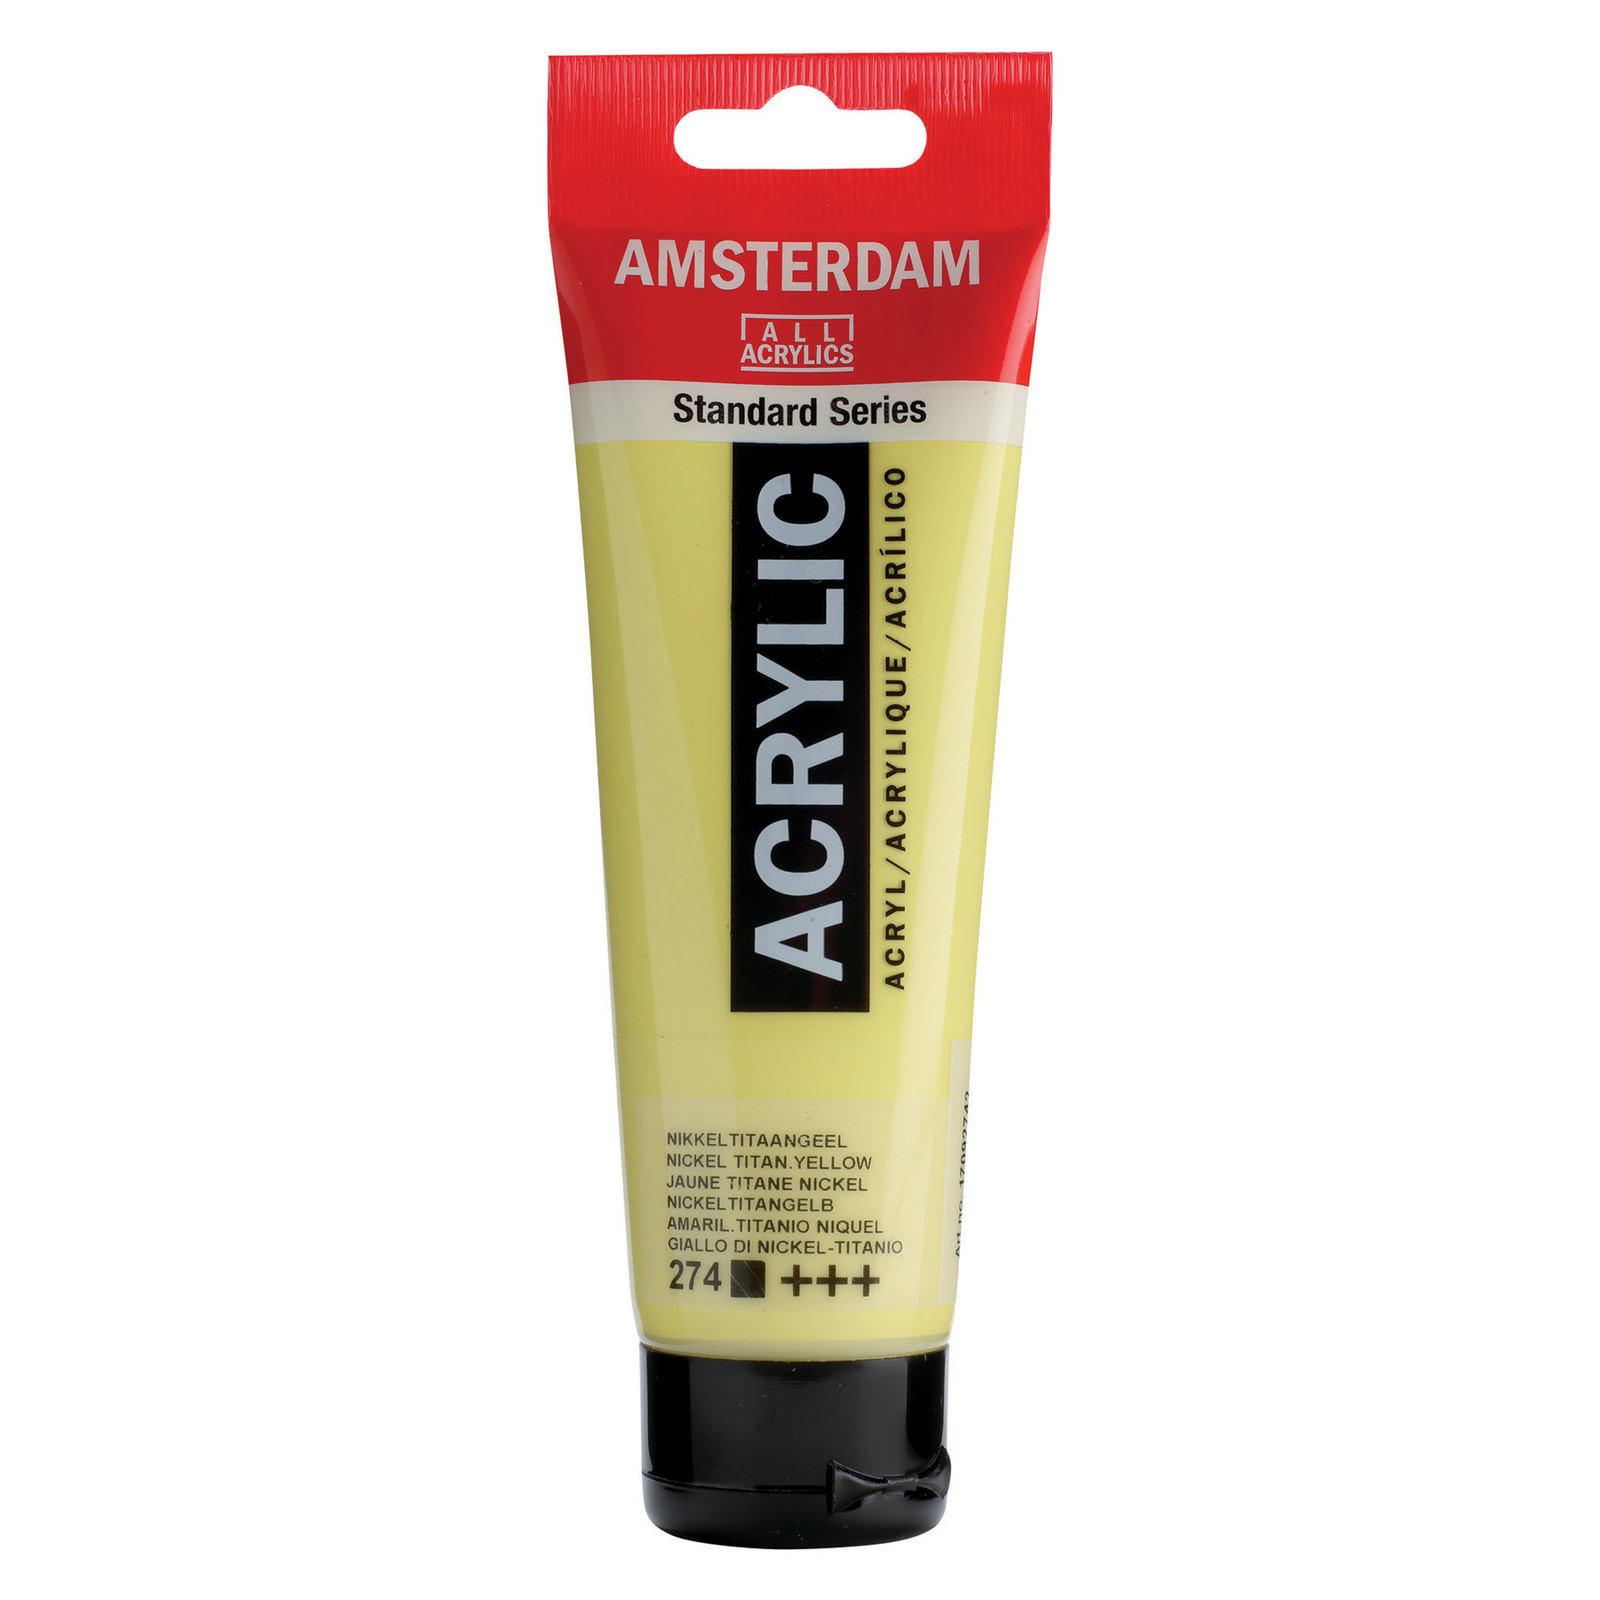 Amsterdam Amsterdam Standard Acrylics 120ML Nickel Titanium Yellow